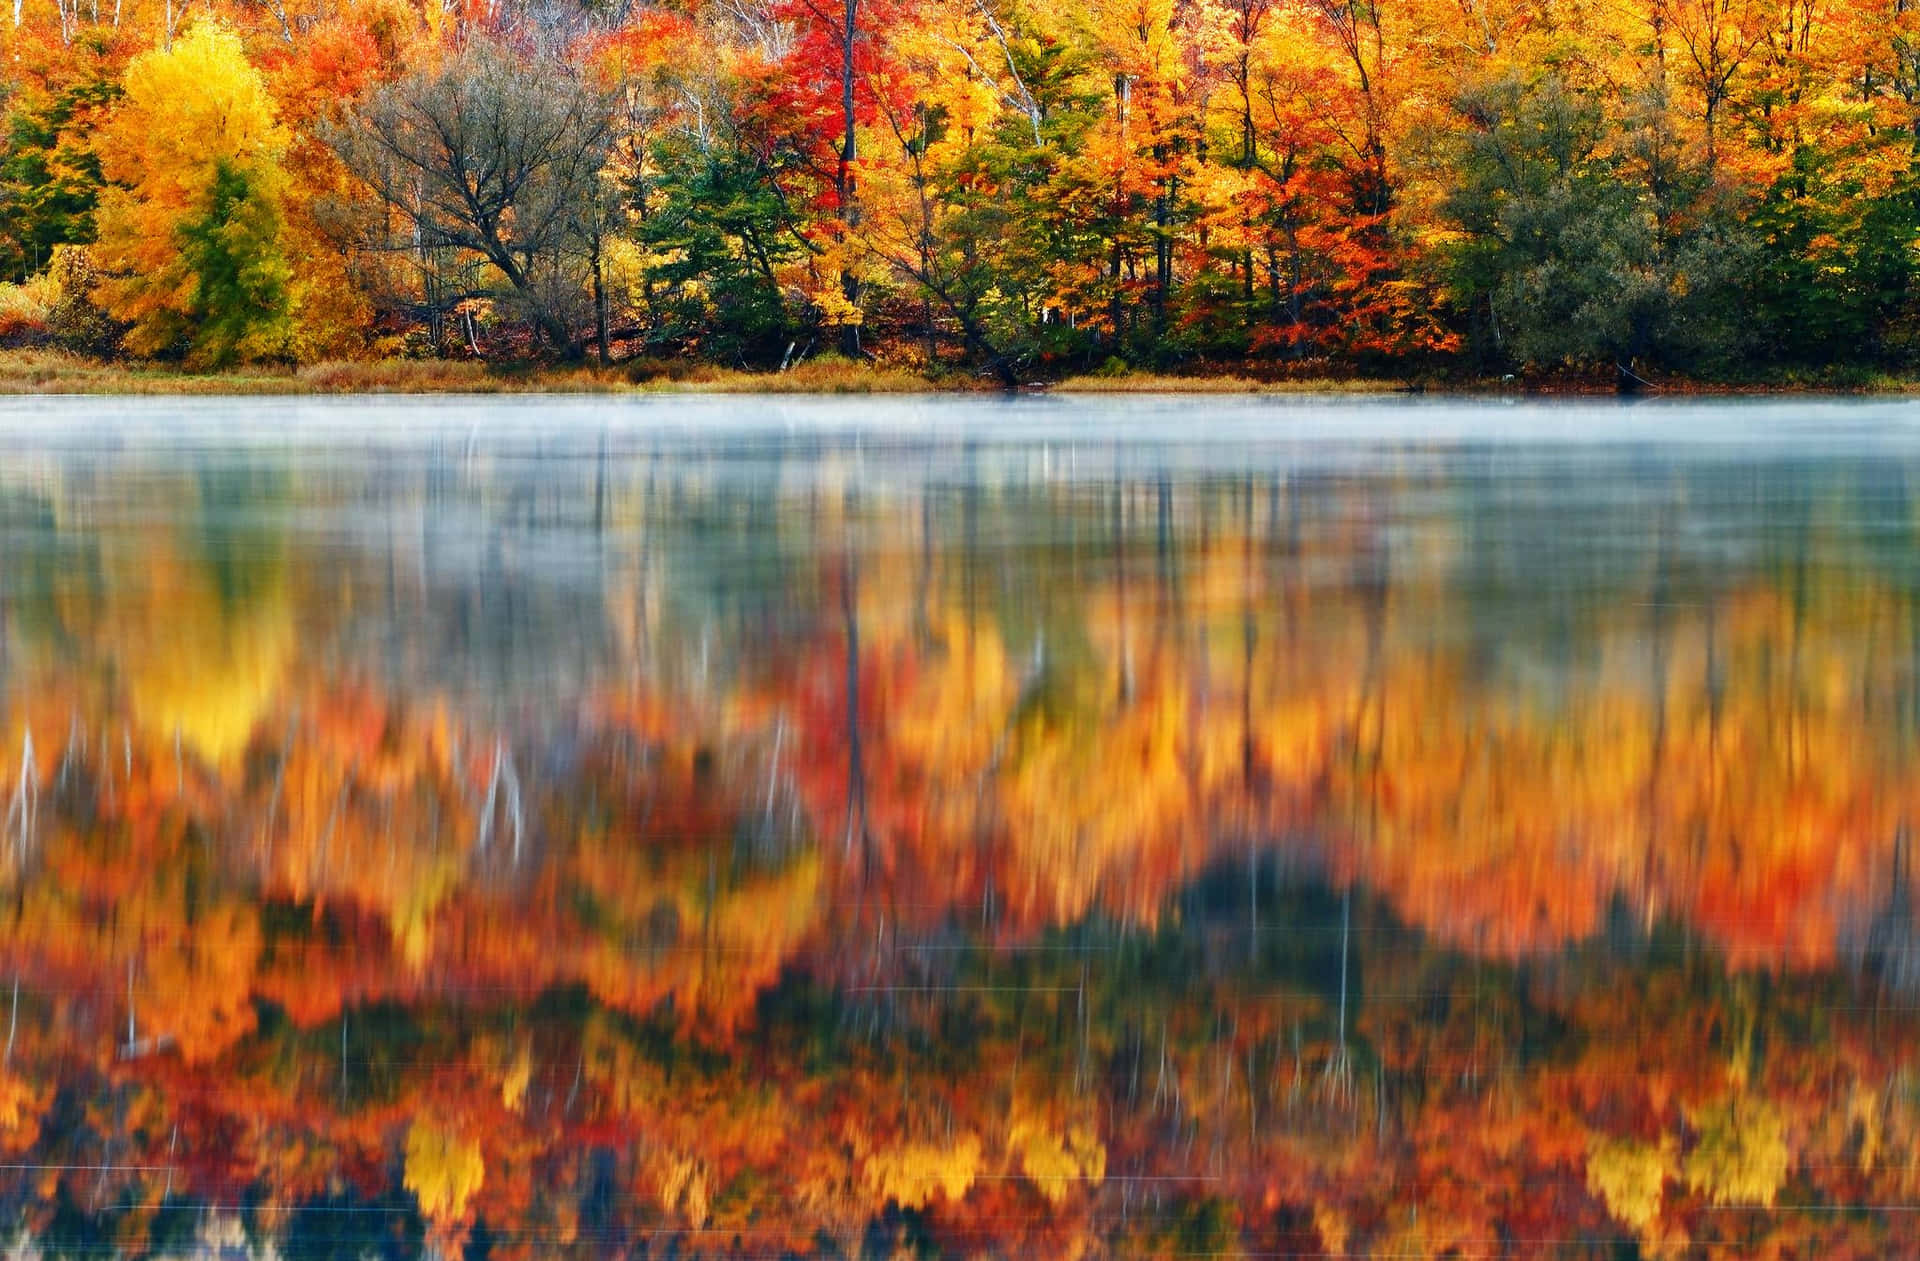 Daydream of Fall - Enjoy the Misty Mystique of the Season